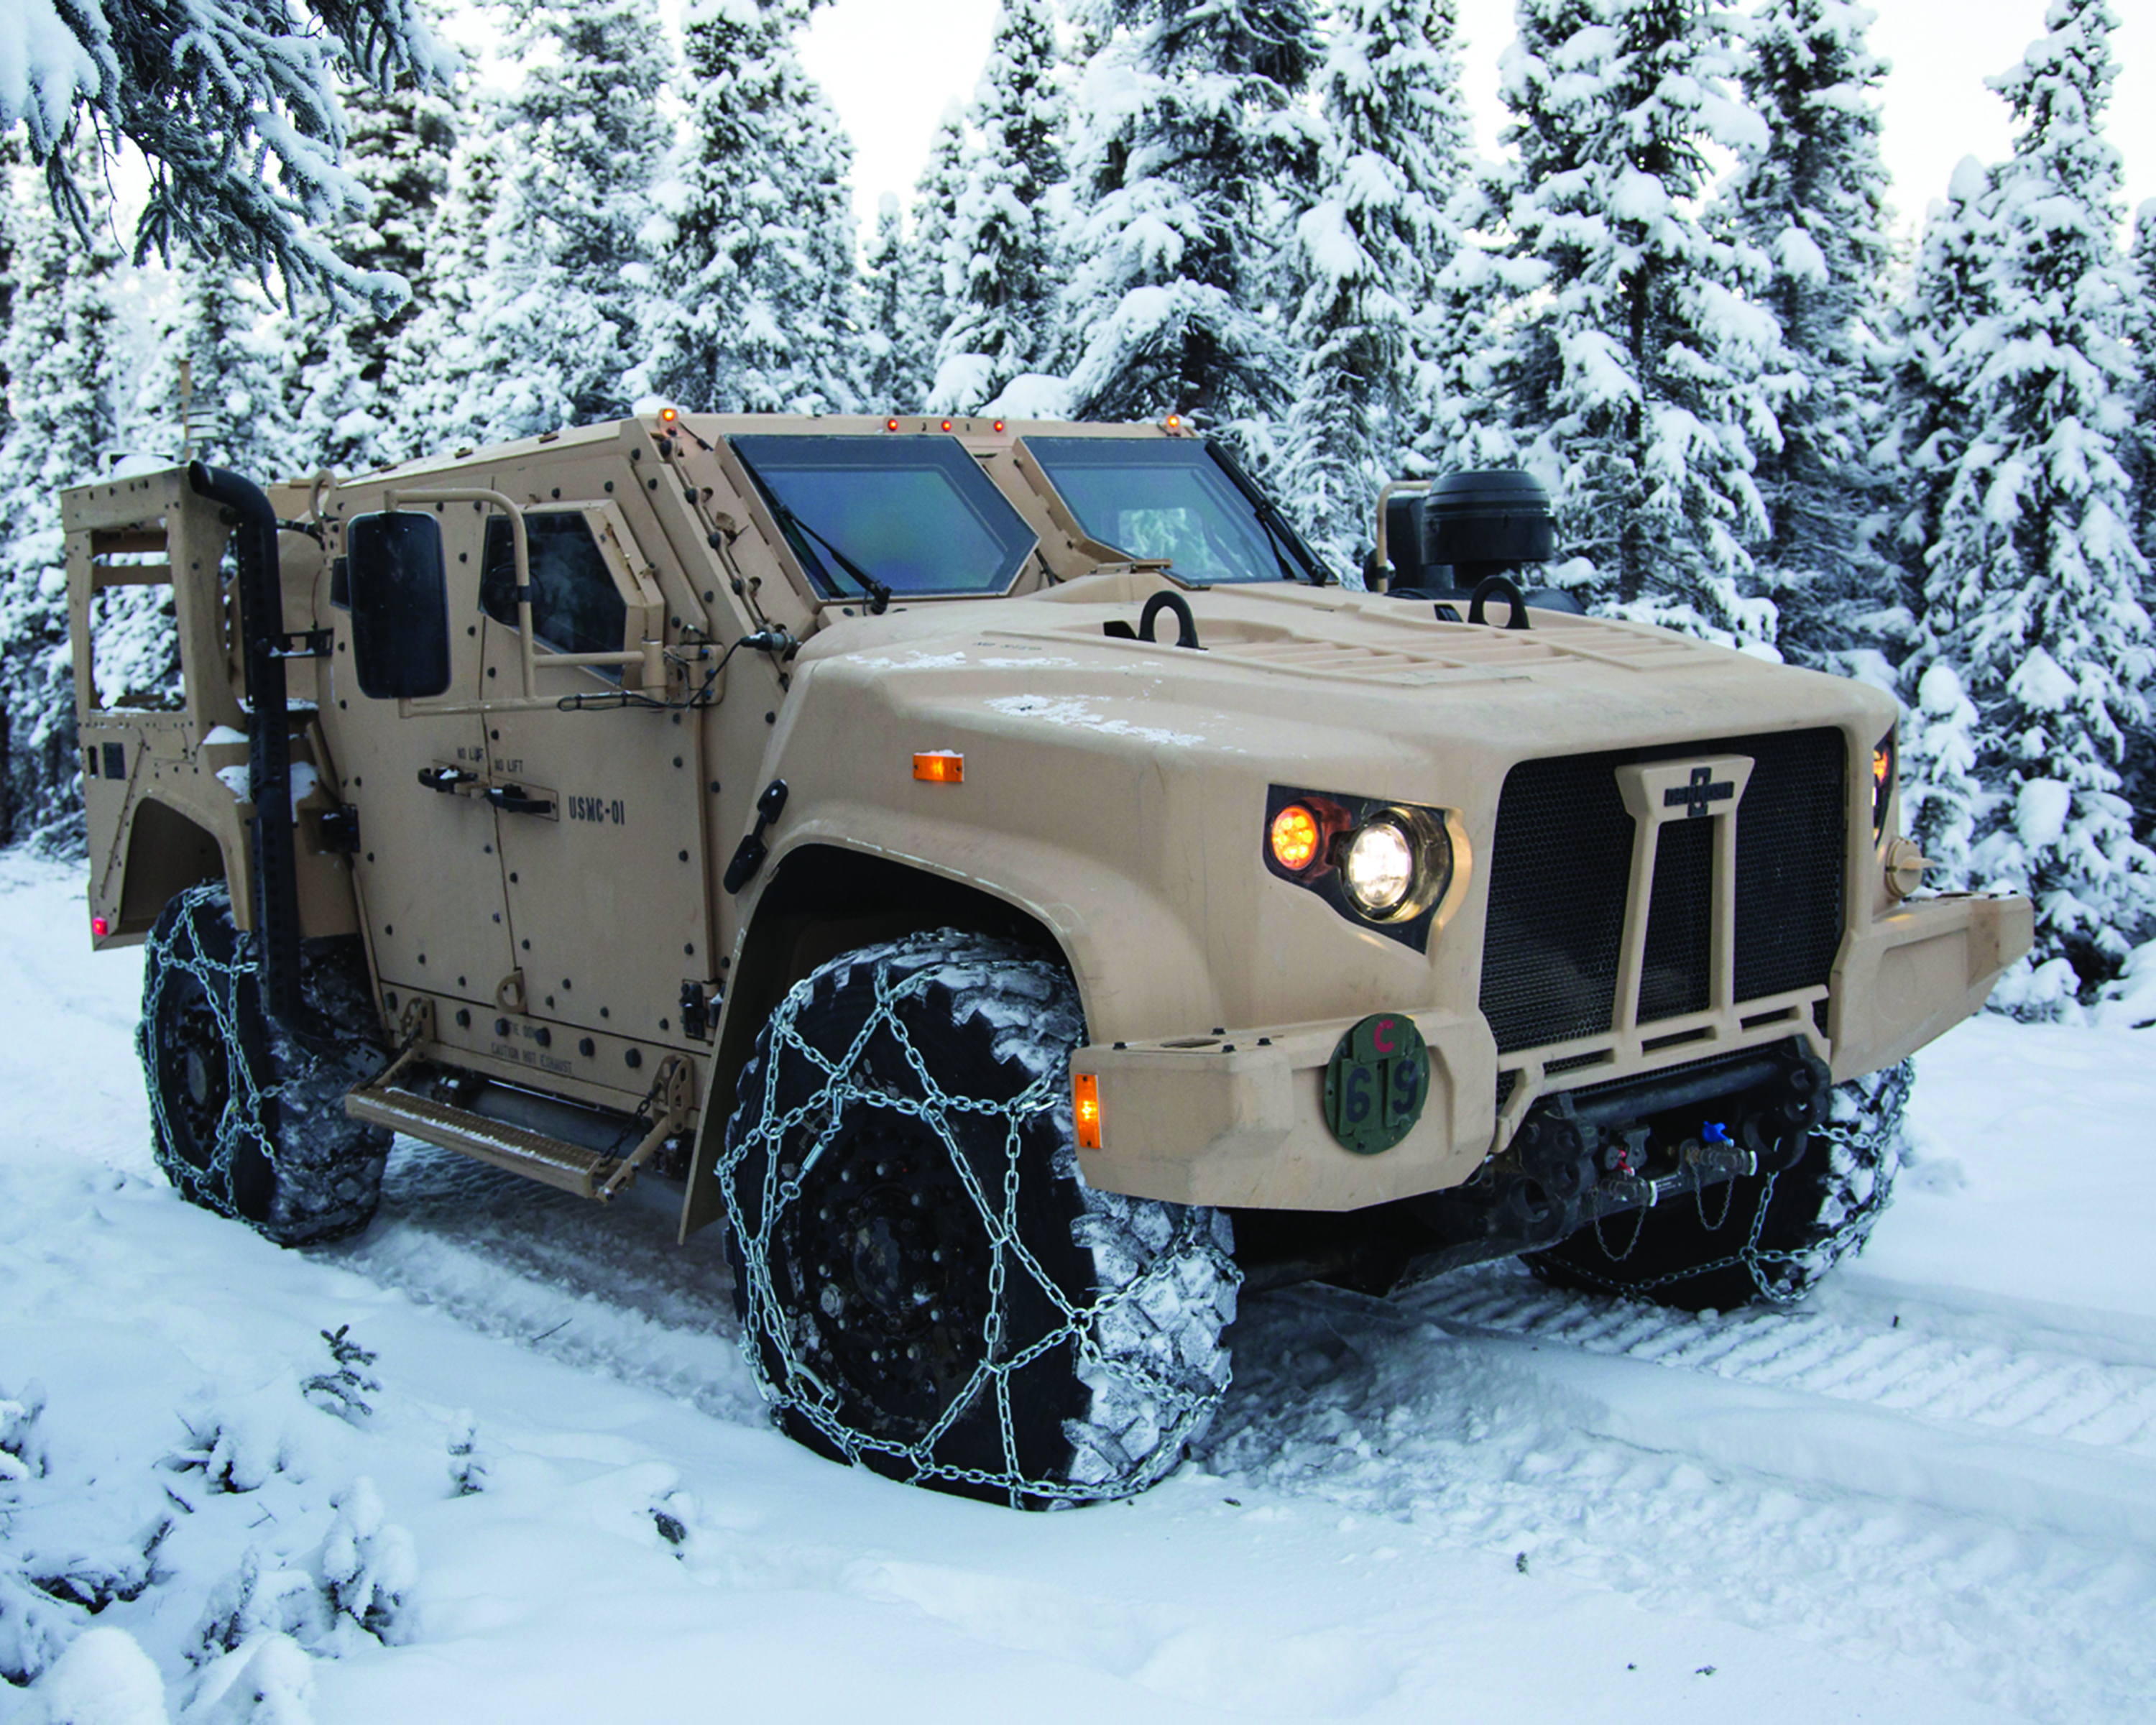 Oshkosh Defense JLTV (Joint Light Tactical Vehicle) by Oshkosh Defense